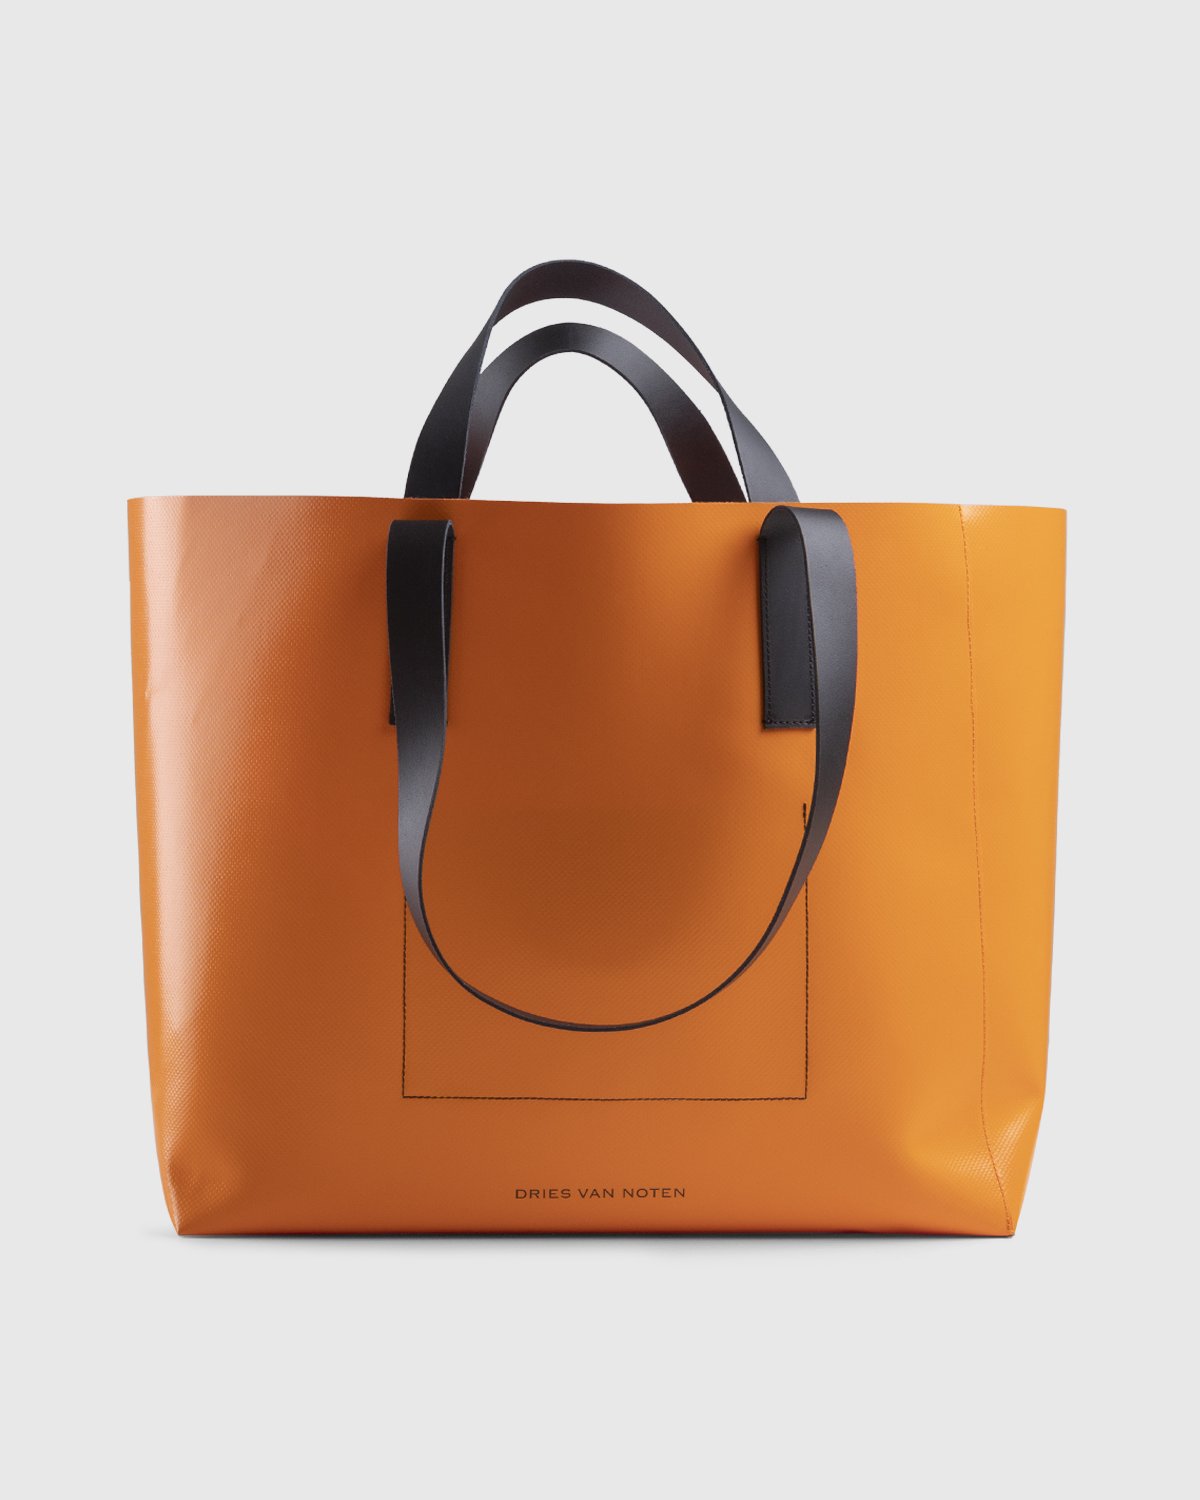 Dries van Noten - Tote Bag Orange - Accessories - Orange - Image 1